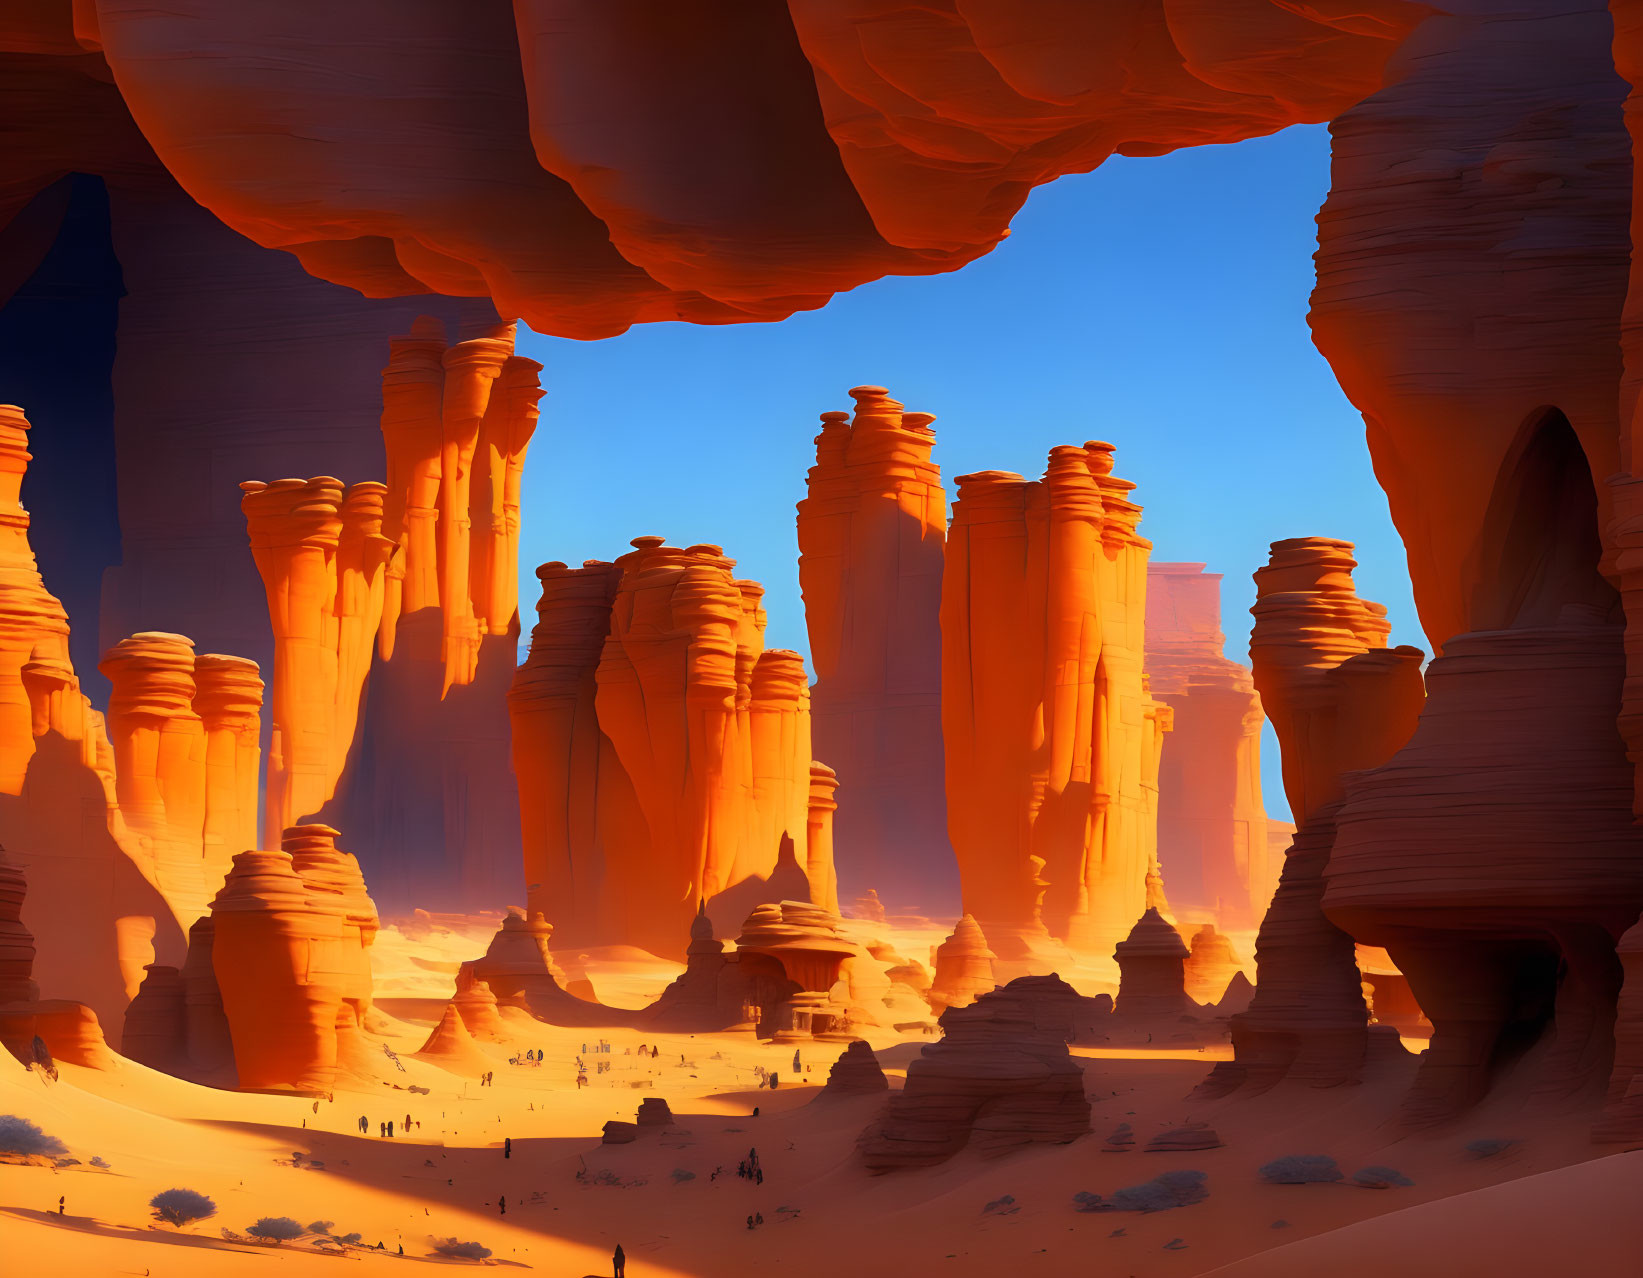 Vivid desert landscape with orange sandstone pillars under blue sky